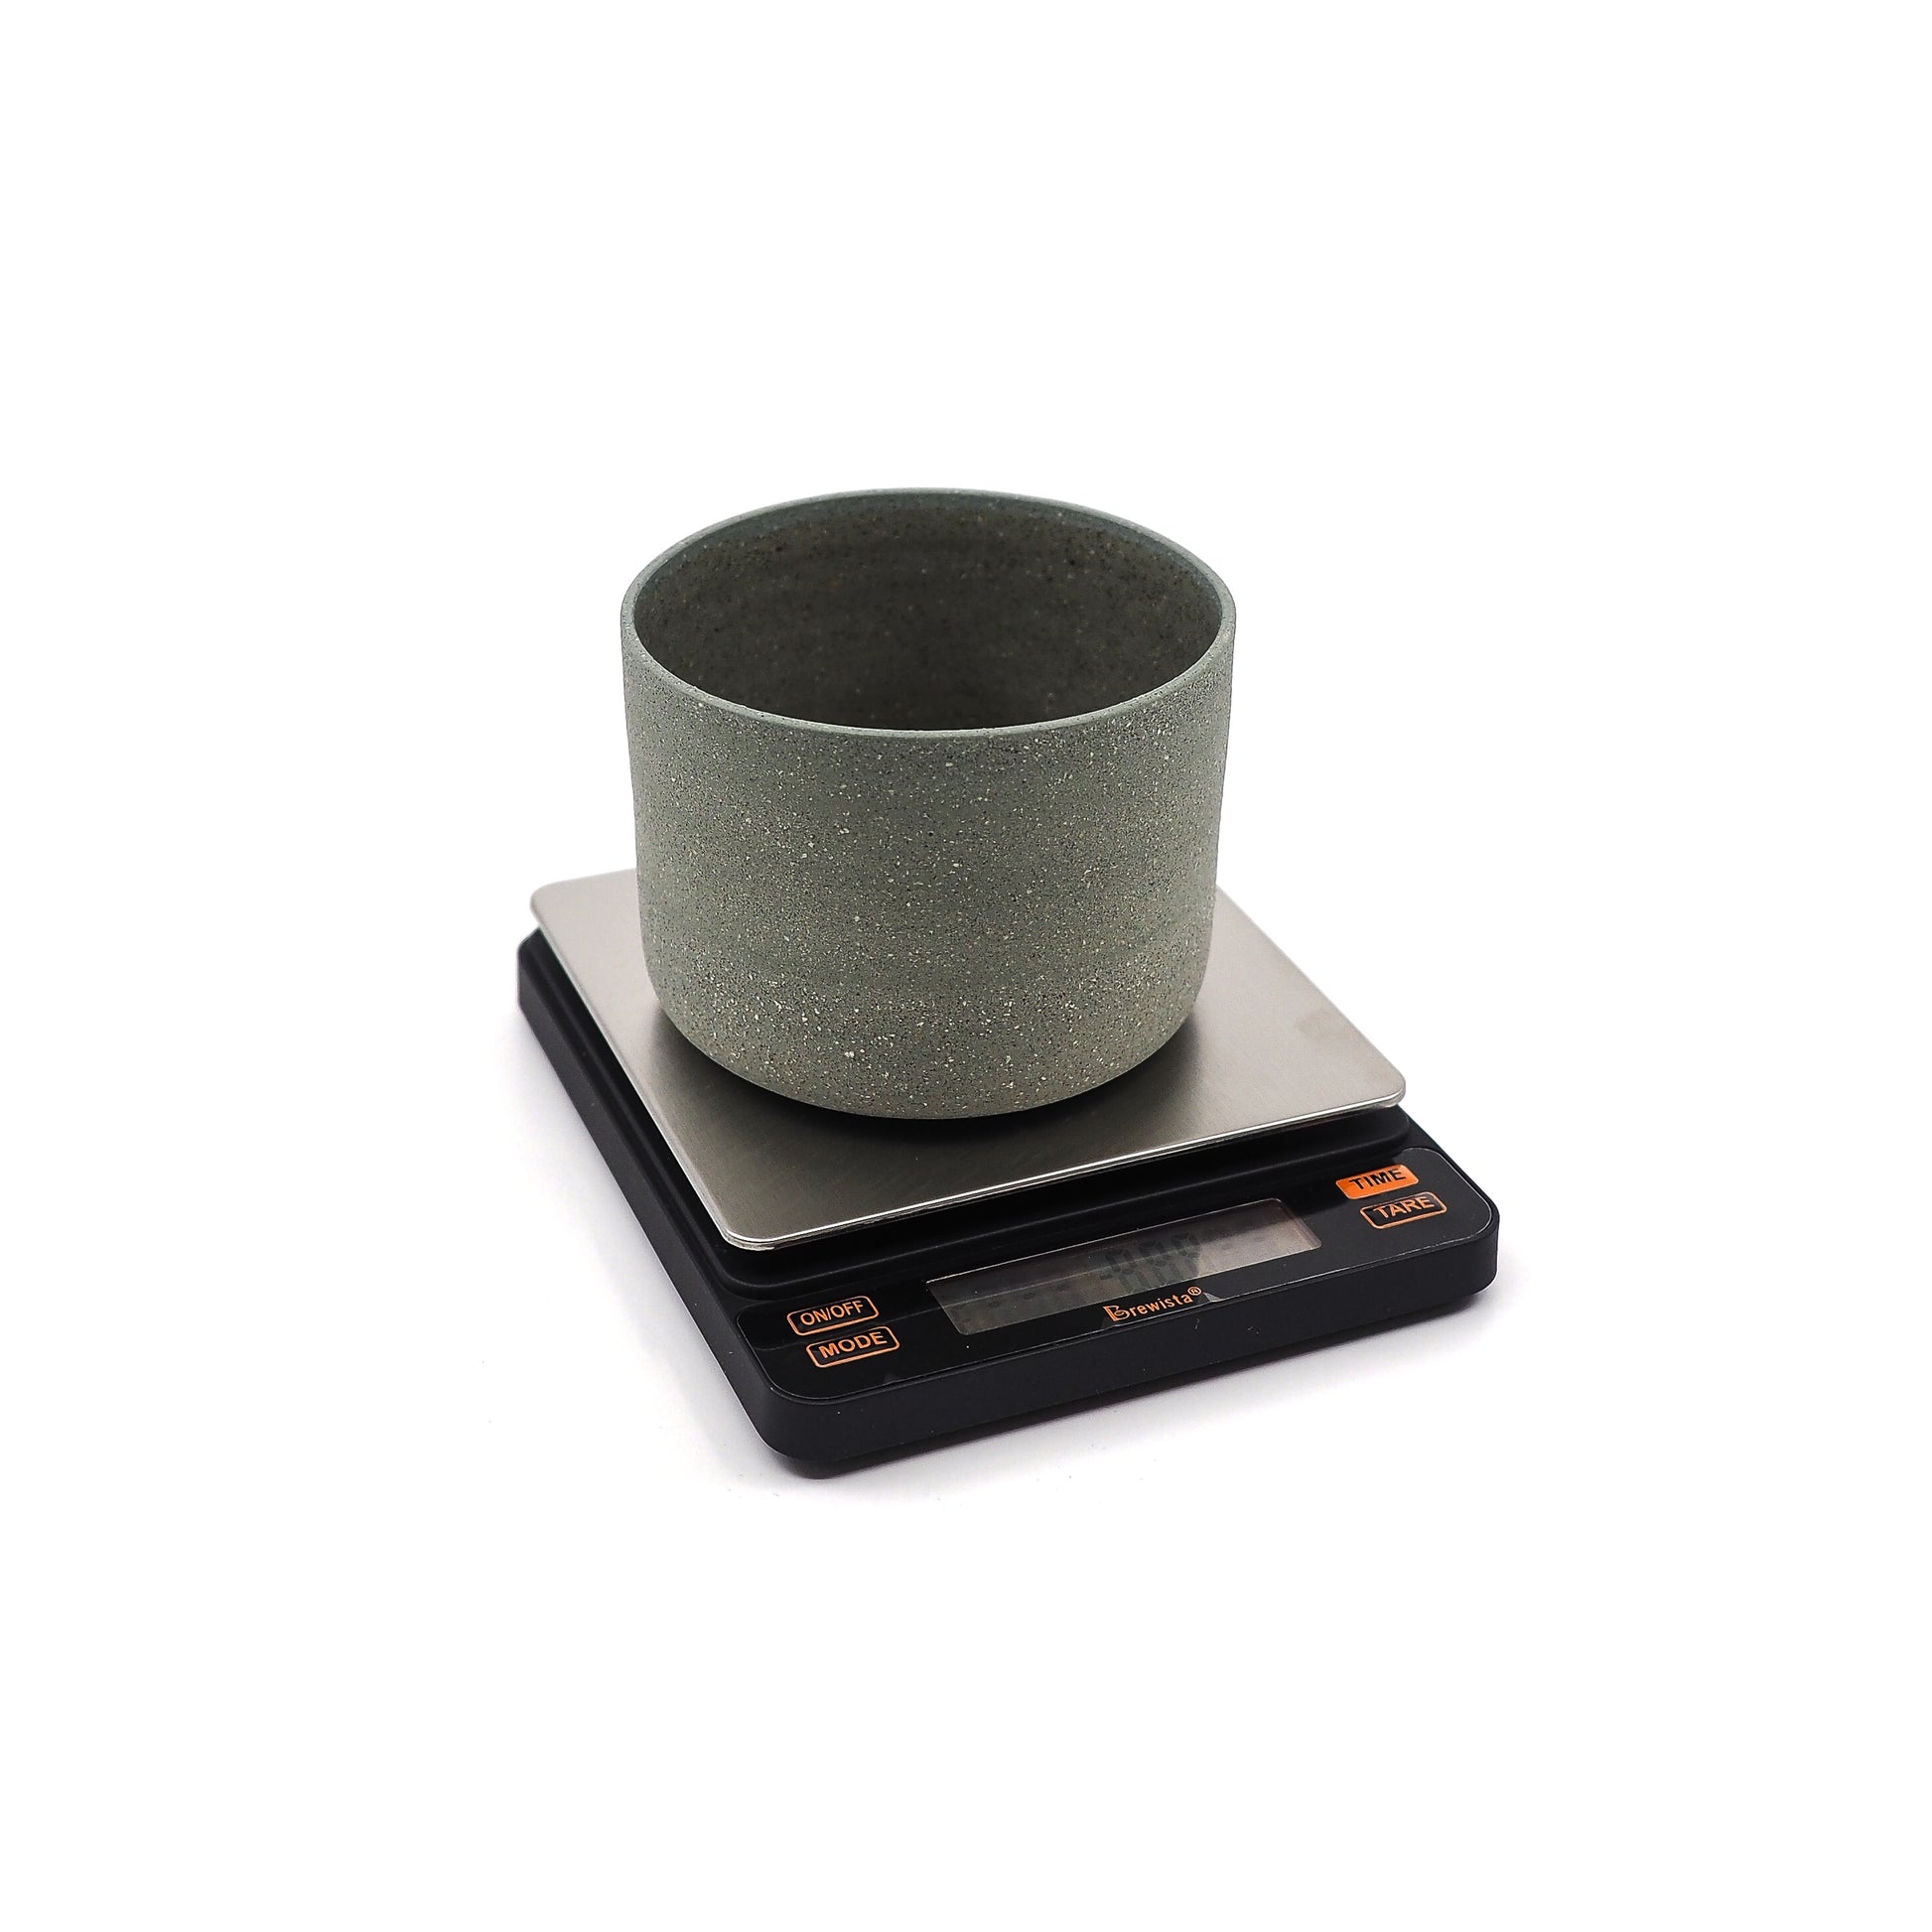 Brewista-smart-scale-silver-black-orange-ghost-ceramic-cup